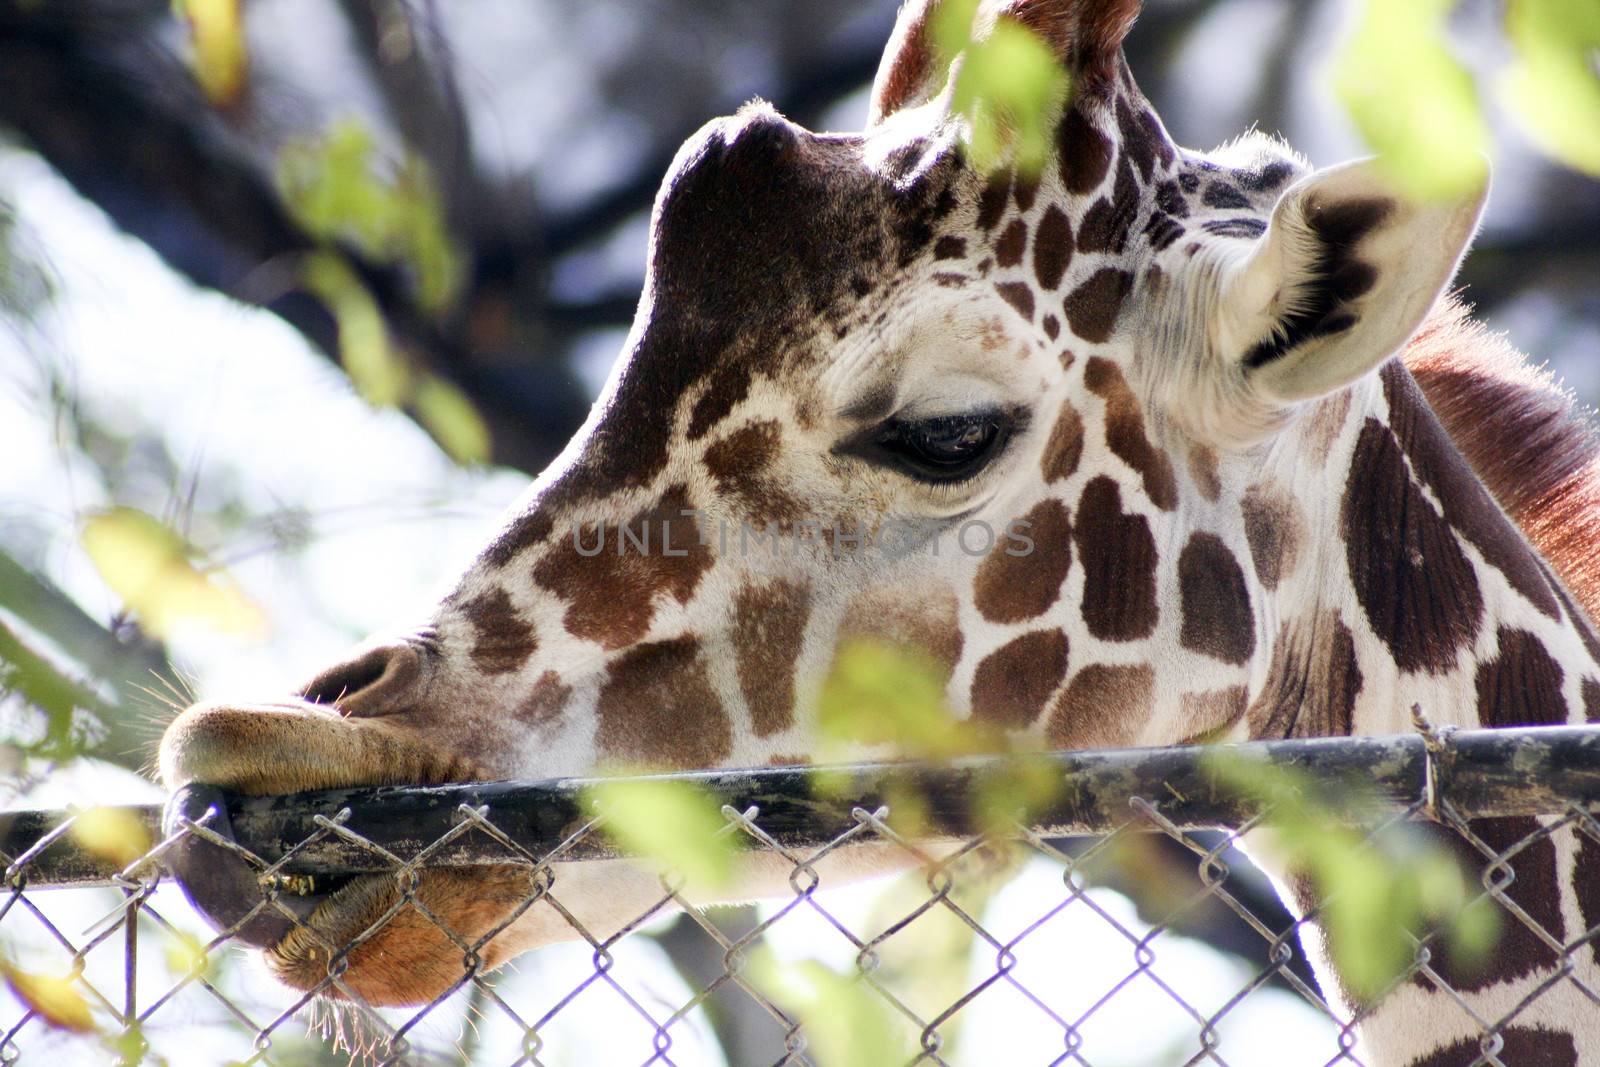 Giraffes head at a fence